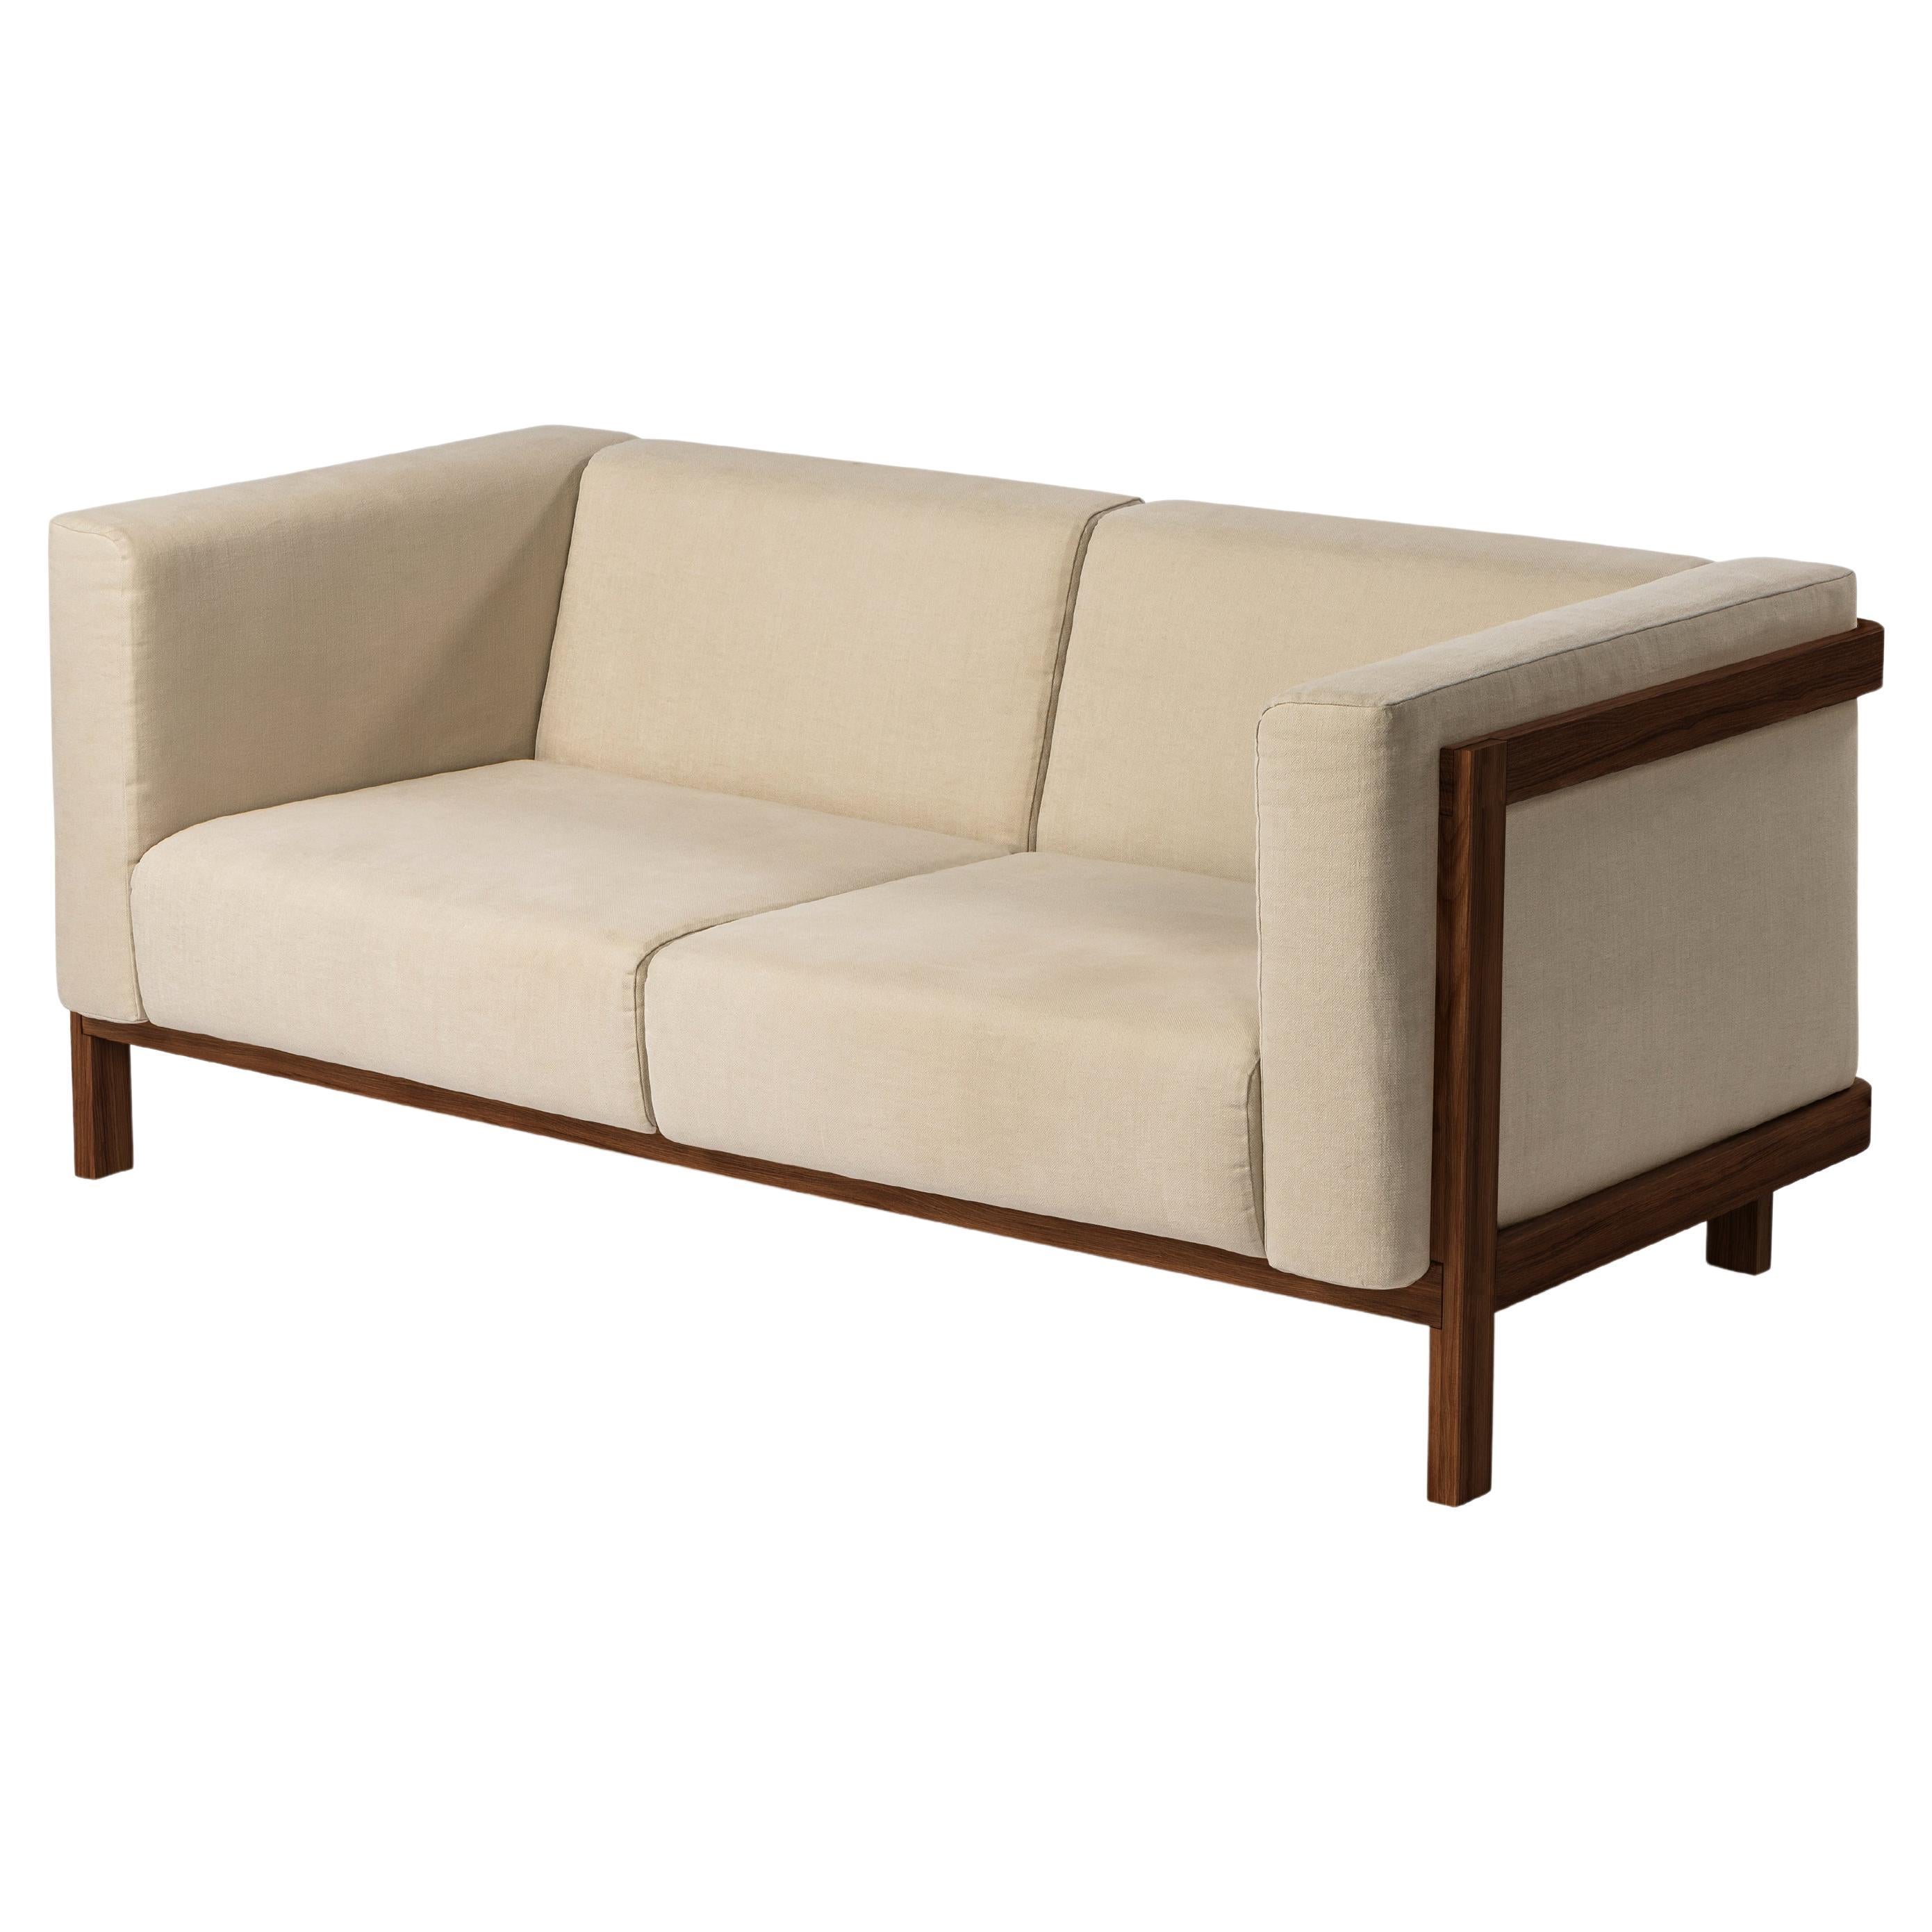 Minimalist two seater sofa walnut - fabric upholstered